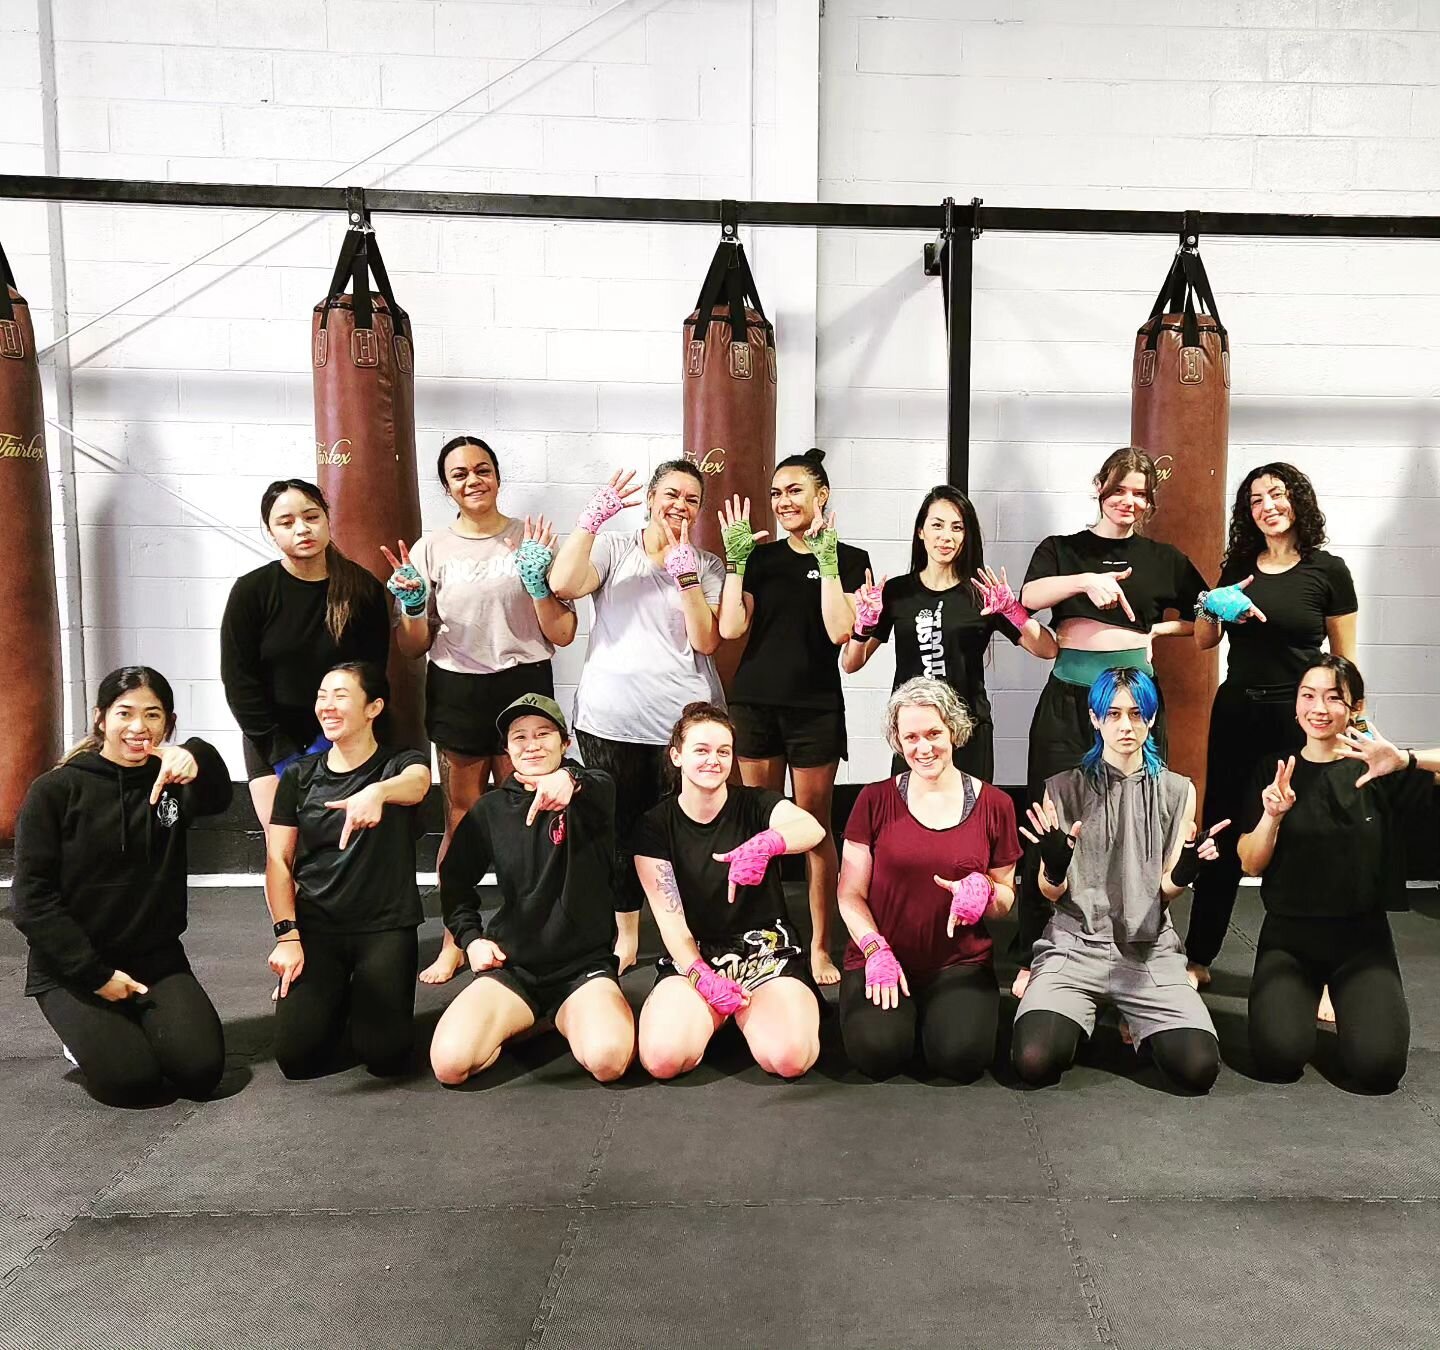 Week 7 for our 8 Week Course! 

1 more week to go!

-------------------
#muaythai #muaythaibeginners #muaythaiclass #womenmuaythai #femalemuaythai #thaikickboxing #boxing #selfdefense #womenmartialarts #womenselfdefense #womenpower